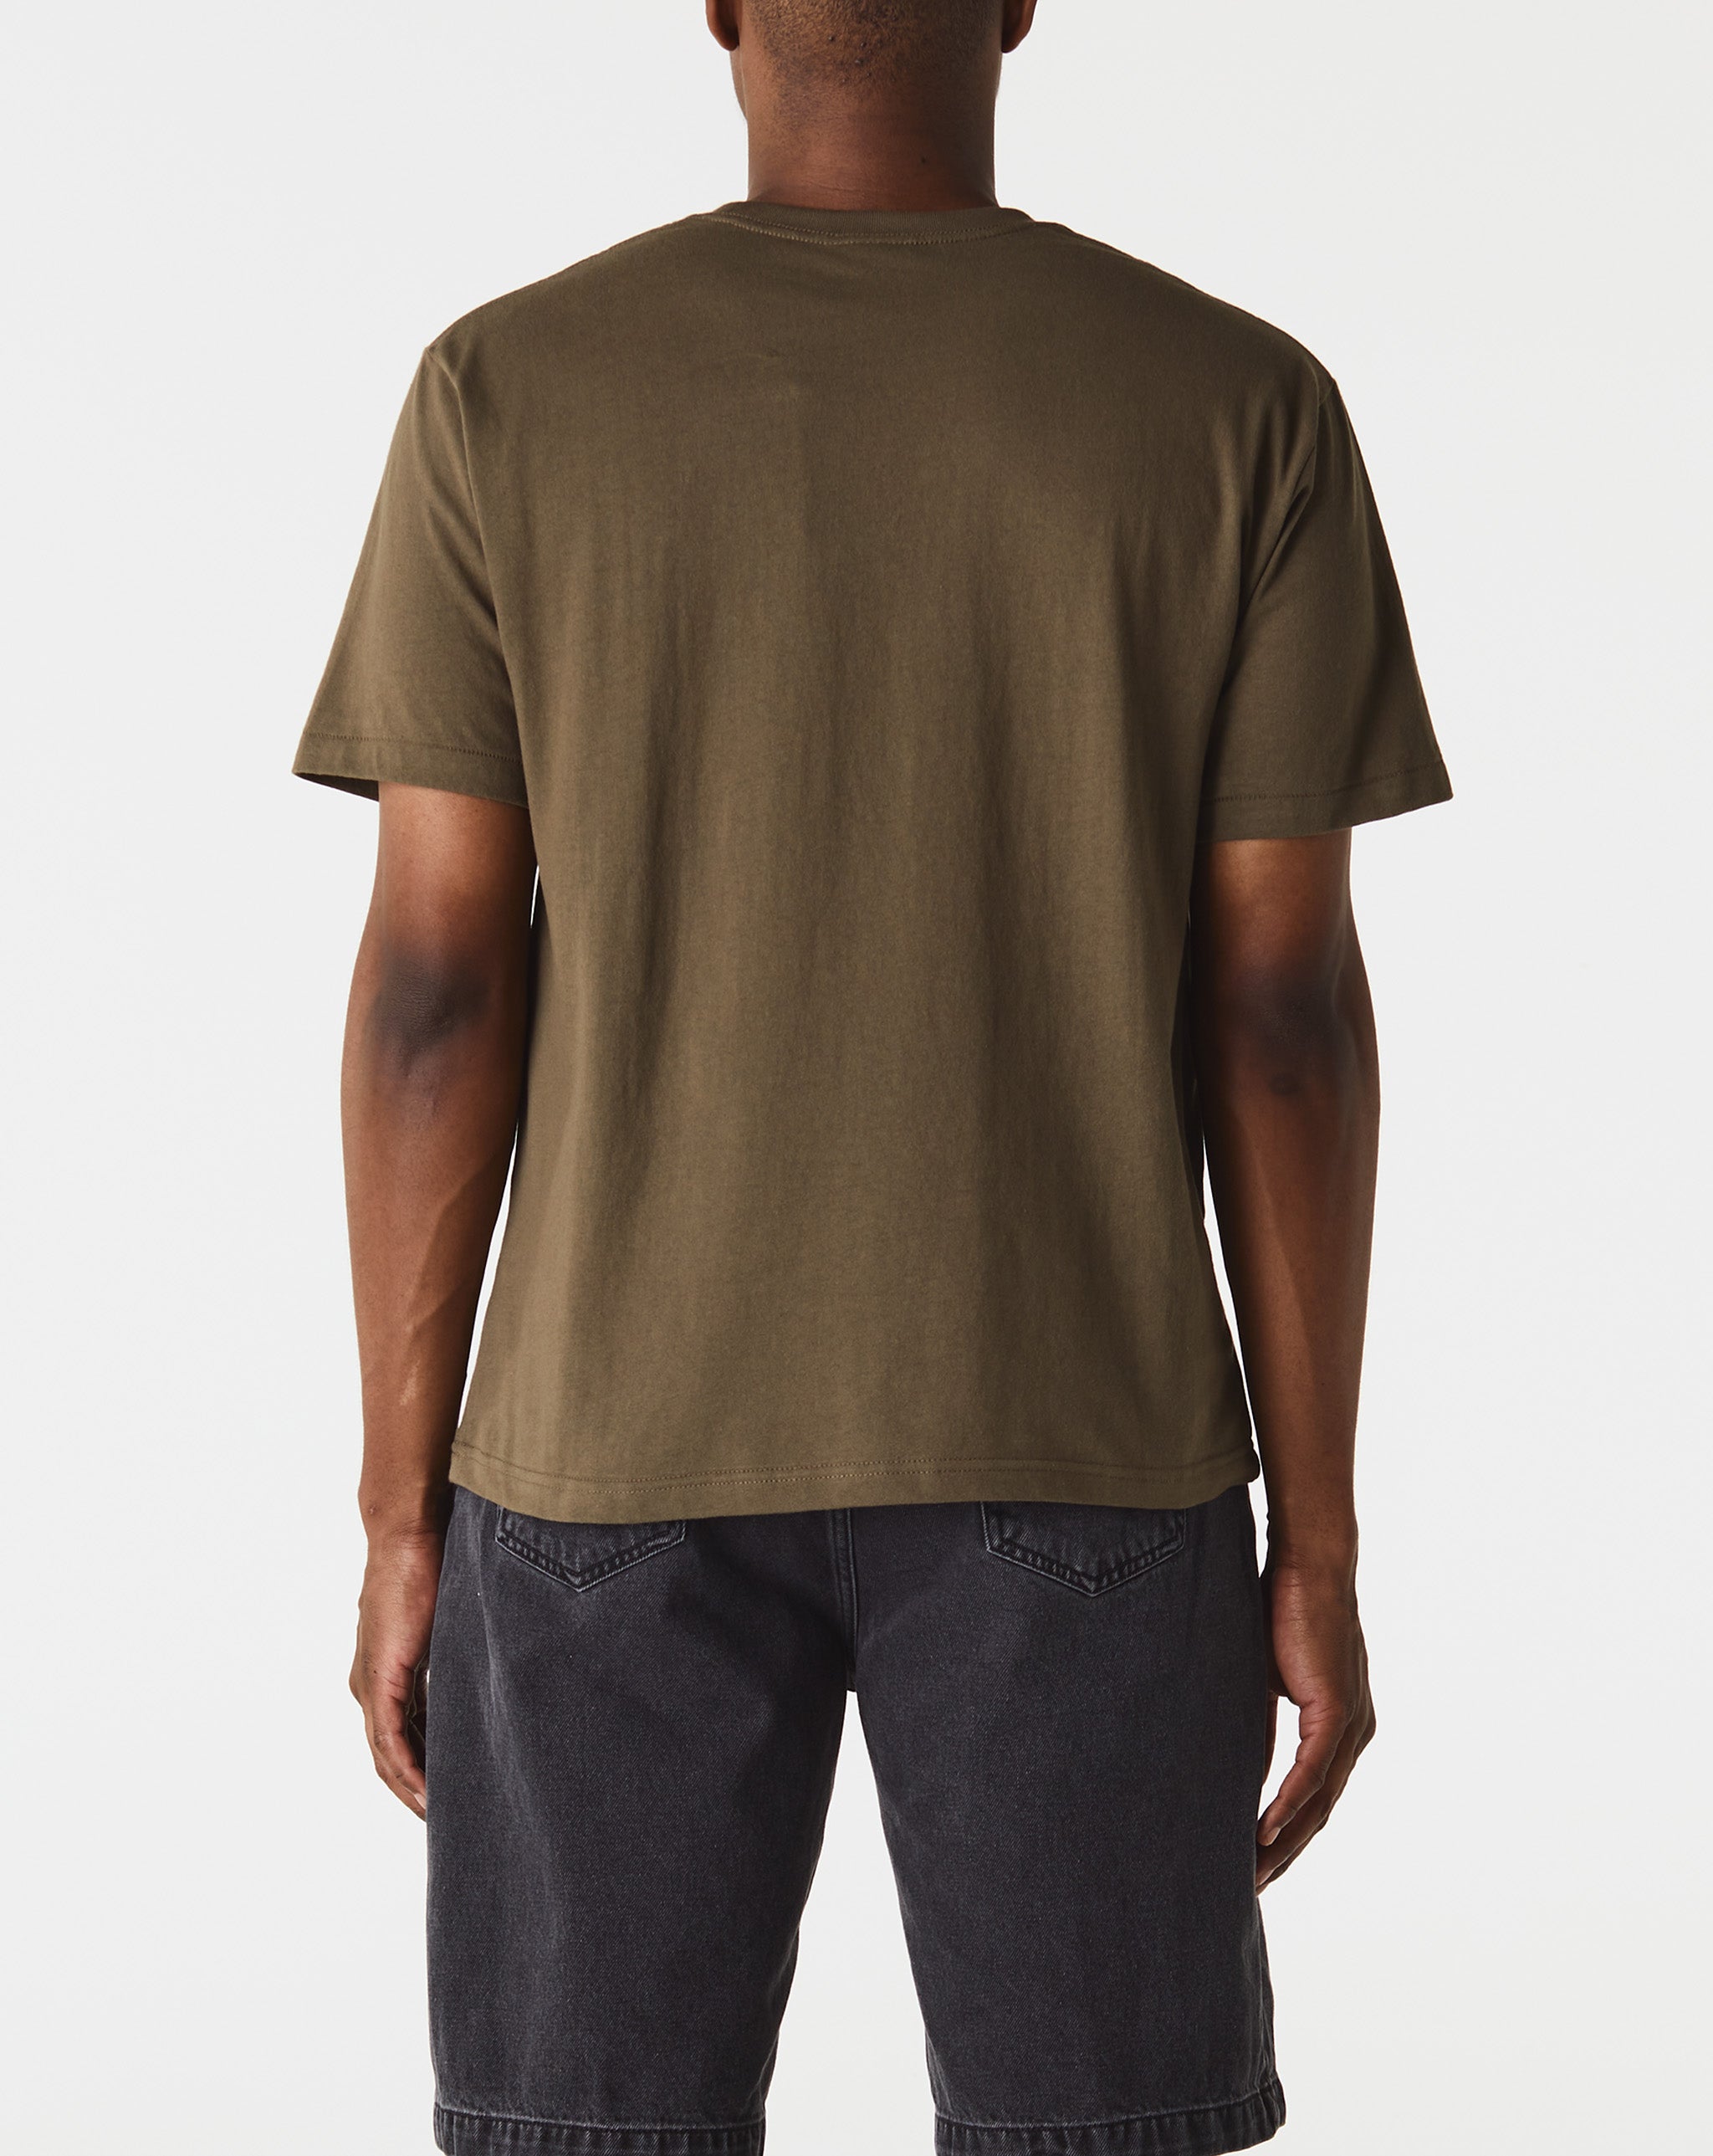 nouvelle FTW Reflective T-Shirt  - Cheap Urlfreeze Jordan outlet